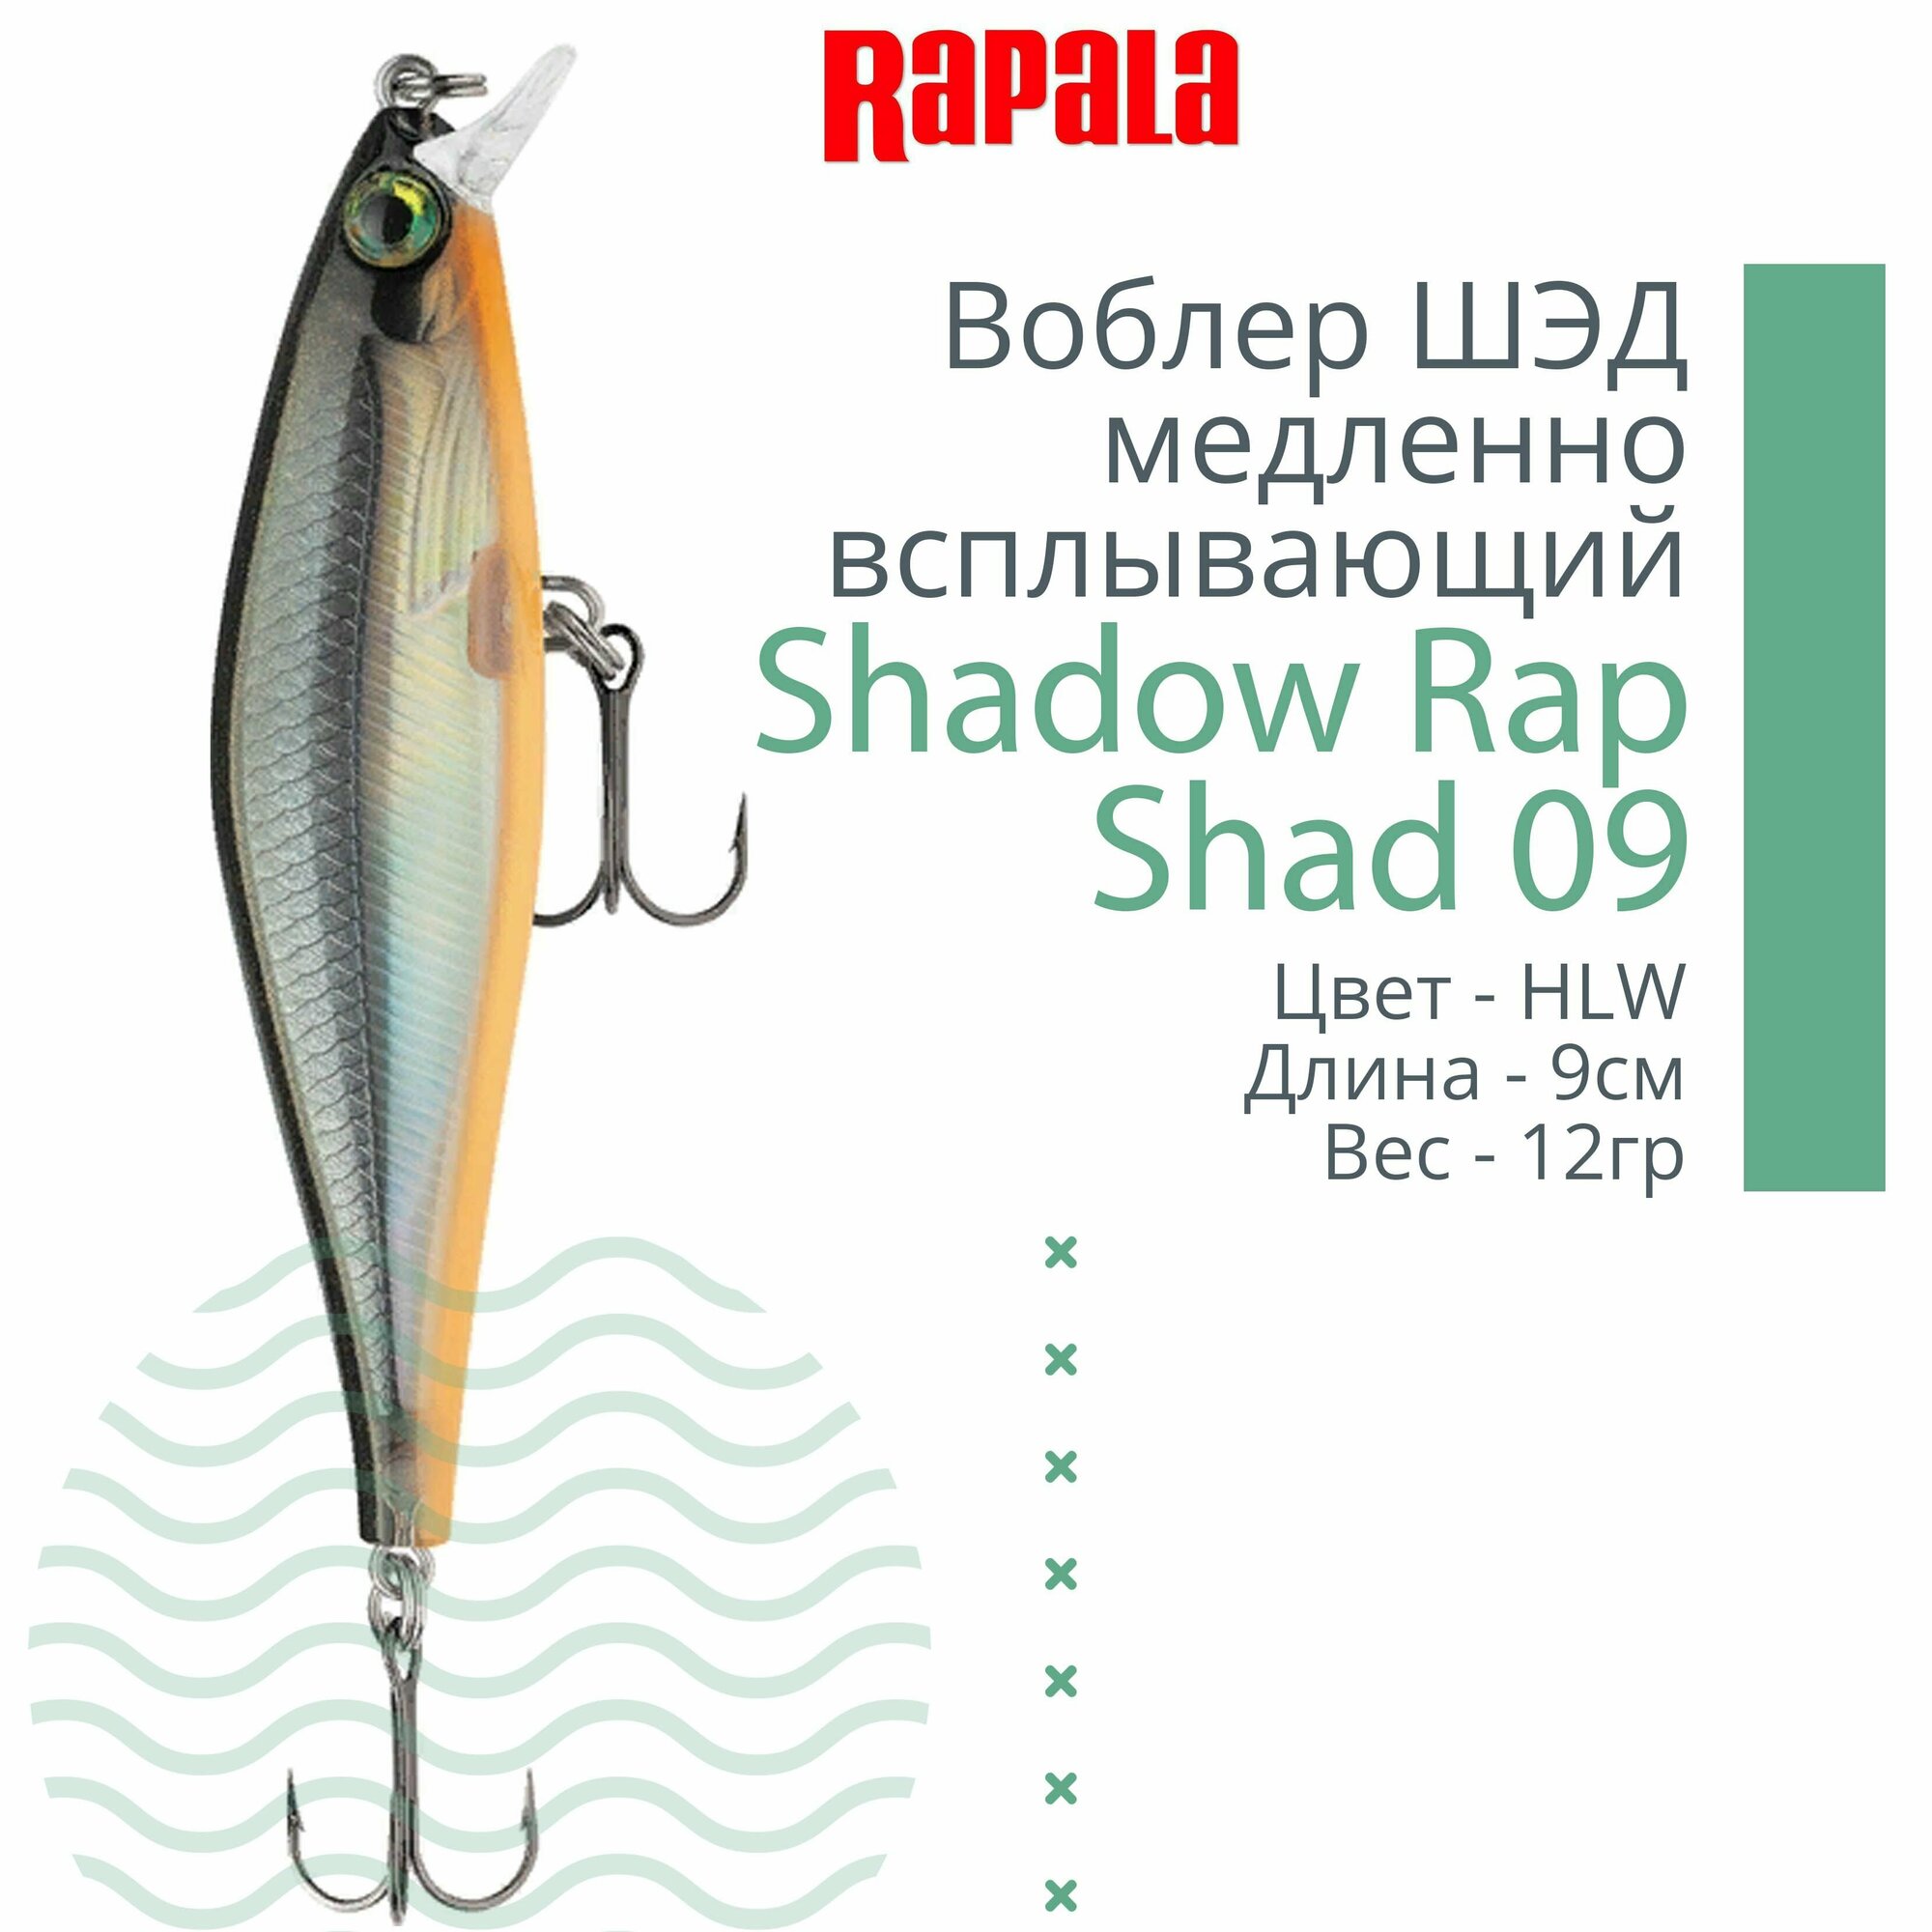 Воблер для рыбалки RAPALA Shadow Rap Shad 09, 9см, 12гр, цвет HLW, медленно всплывающий